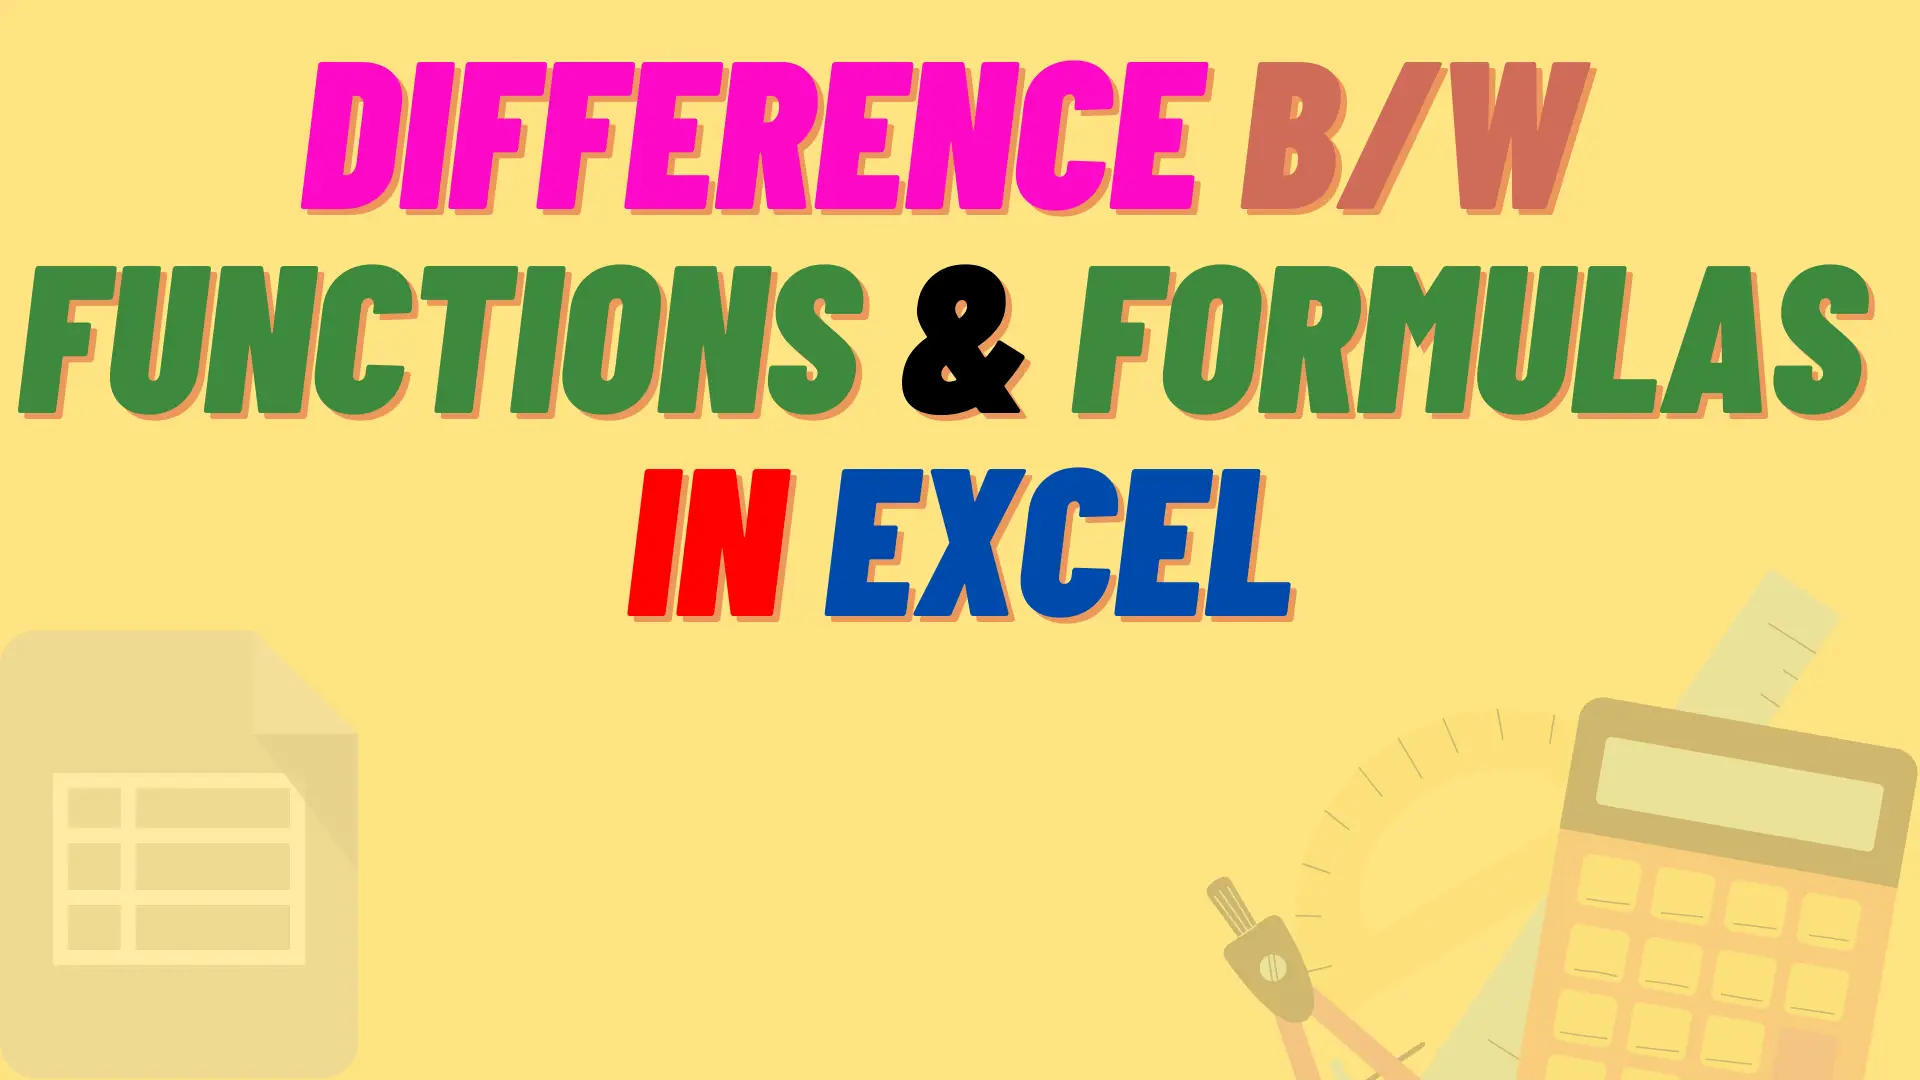 Functions vs Formulas in Excel